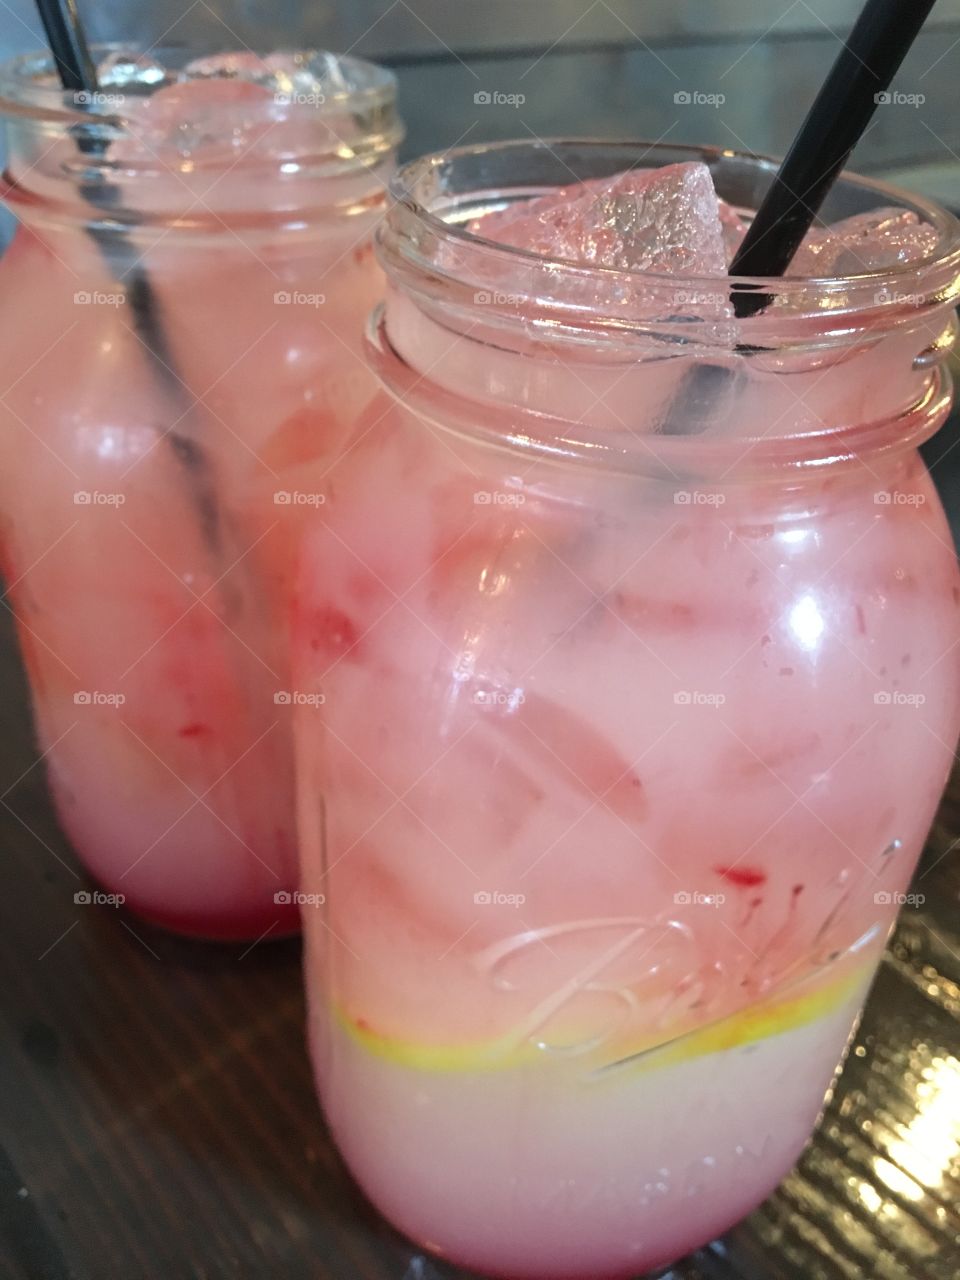 Strawberry Lemonade 